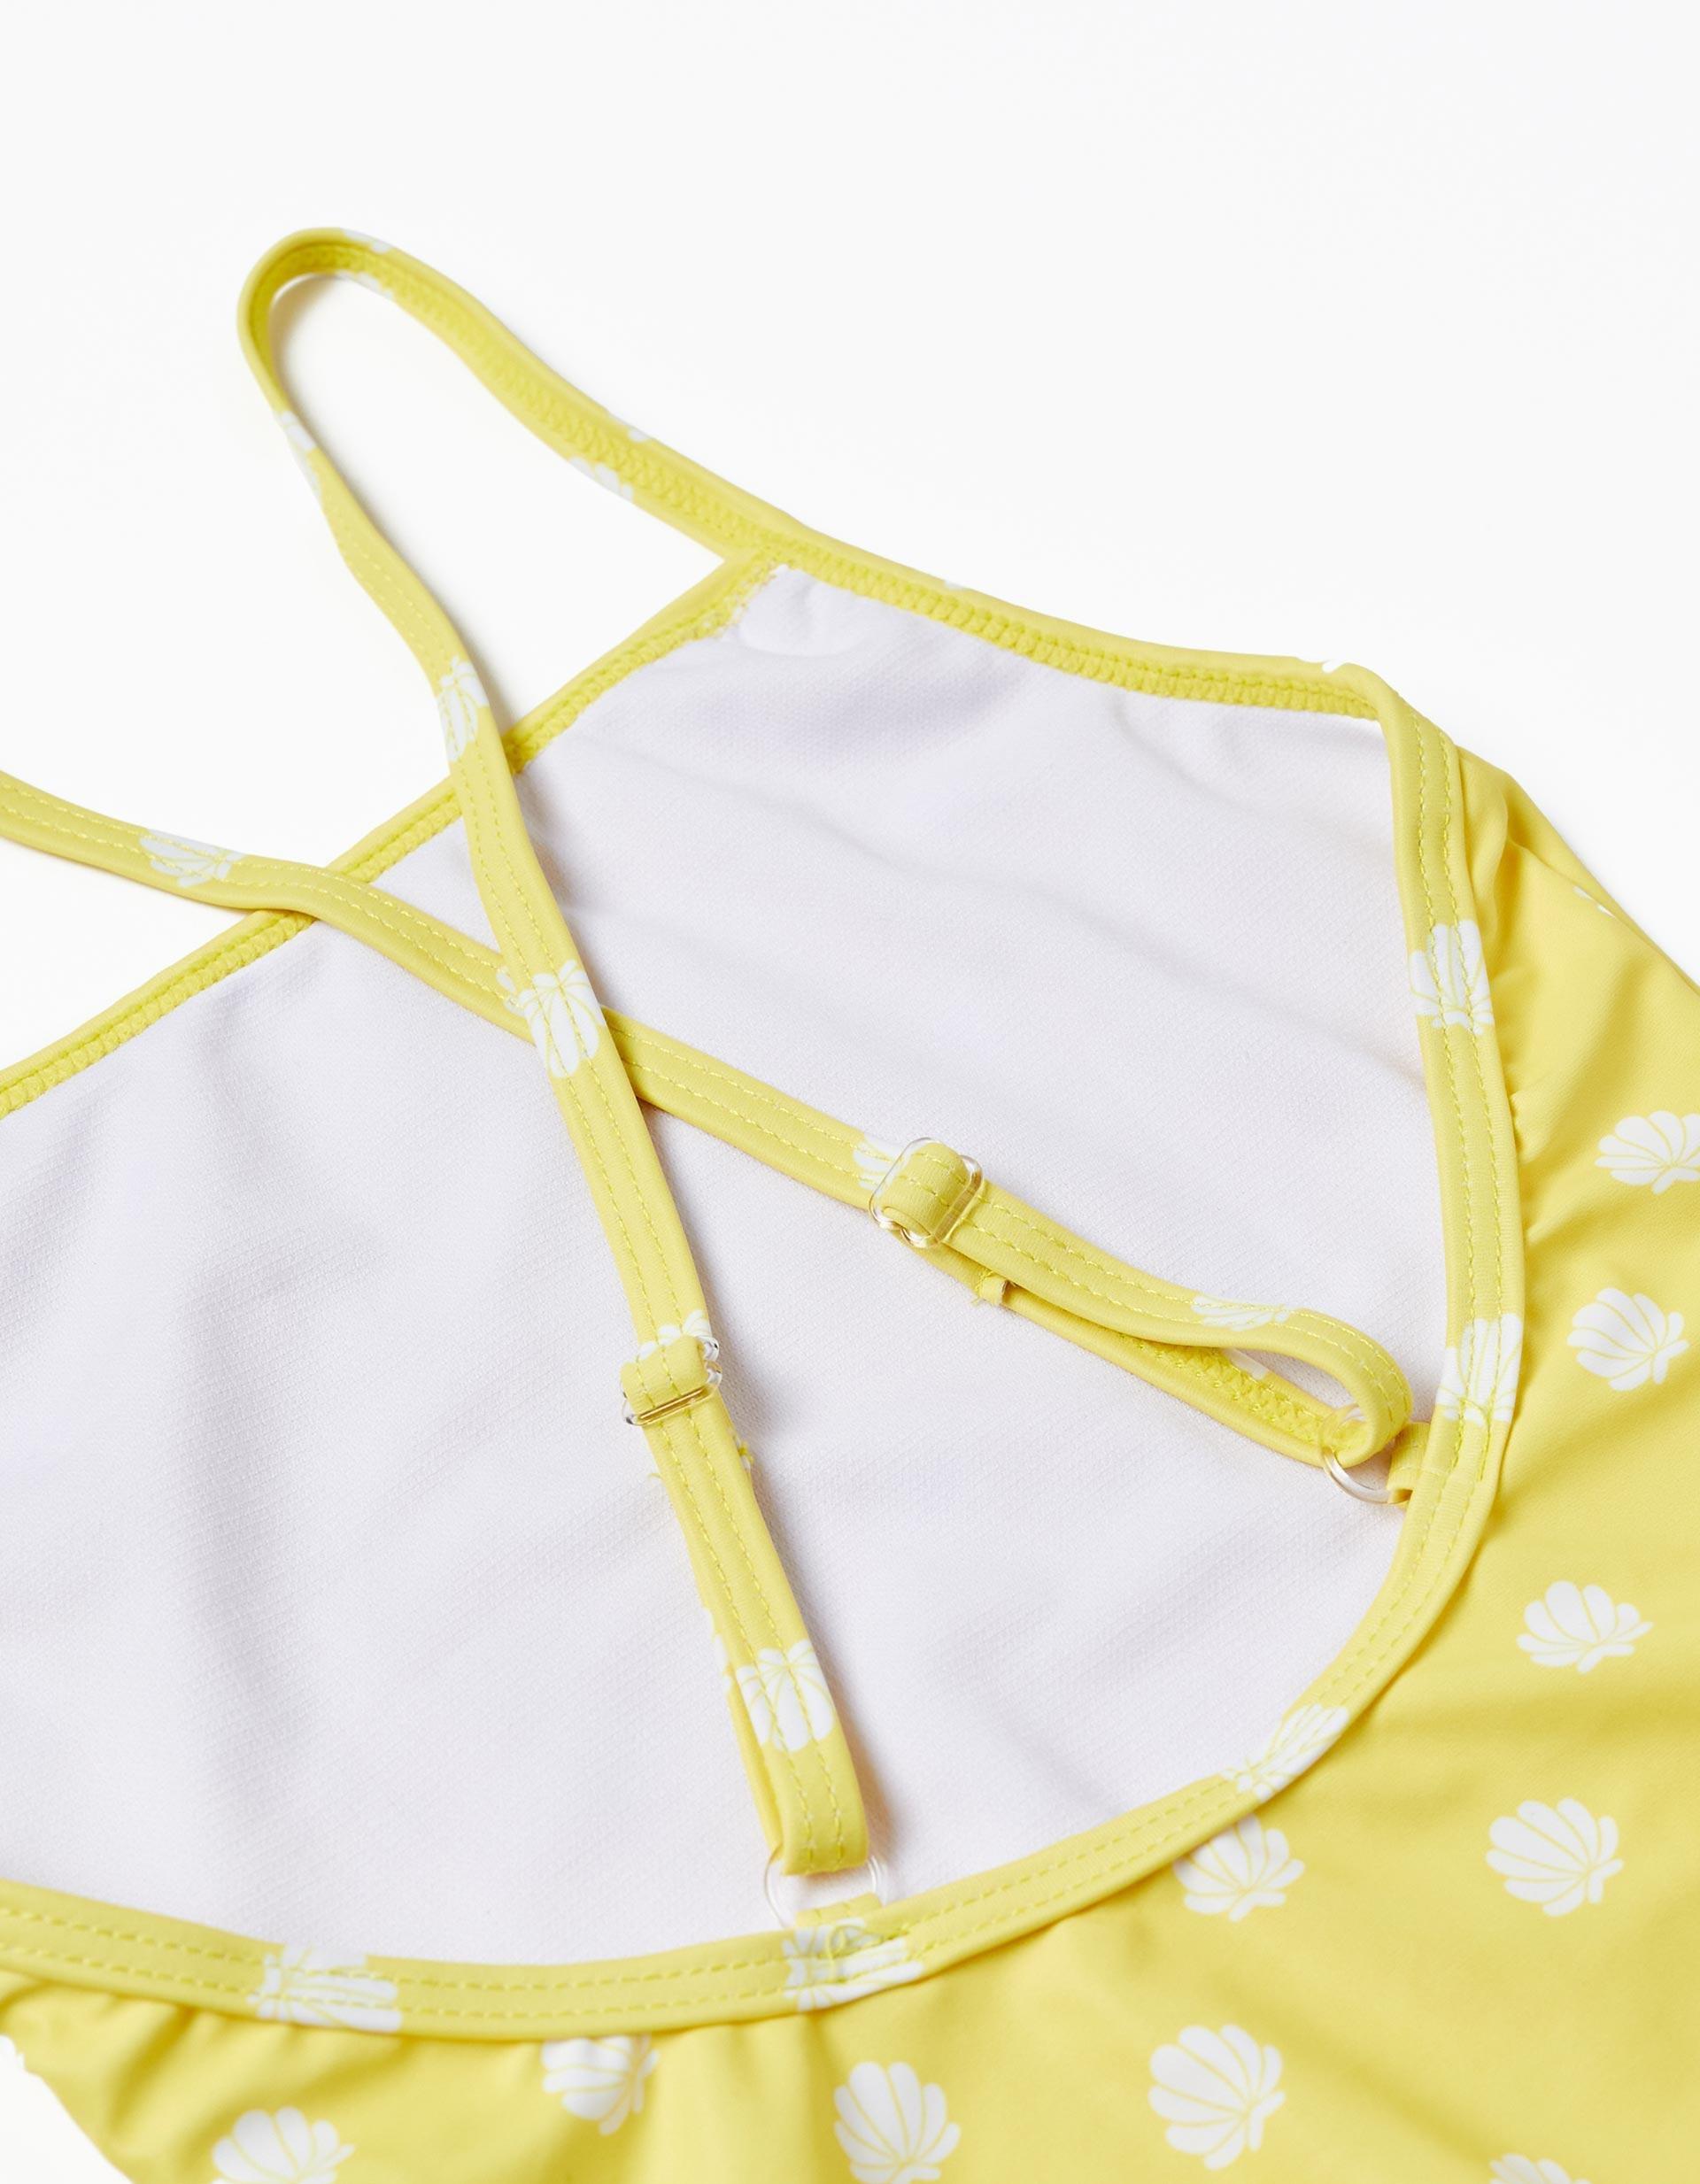 Gant - Yellow Polka Dot Swimsuit, Kids Girls